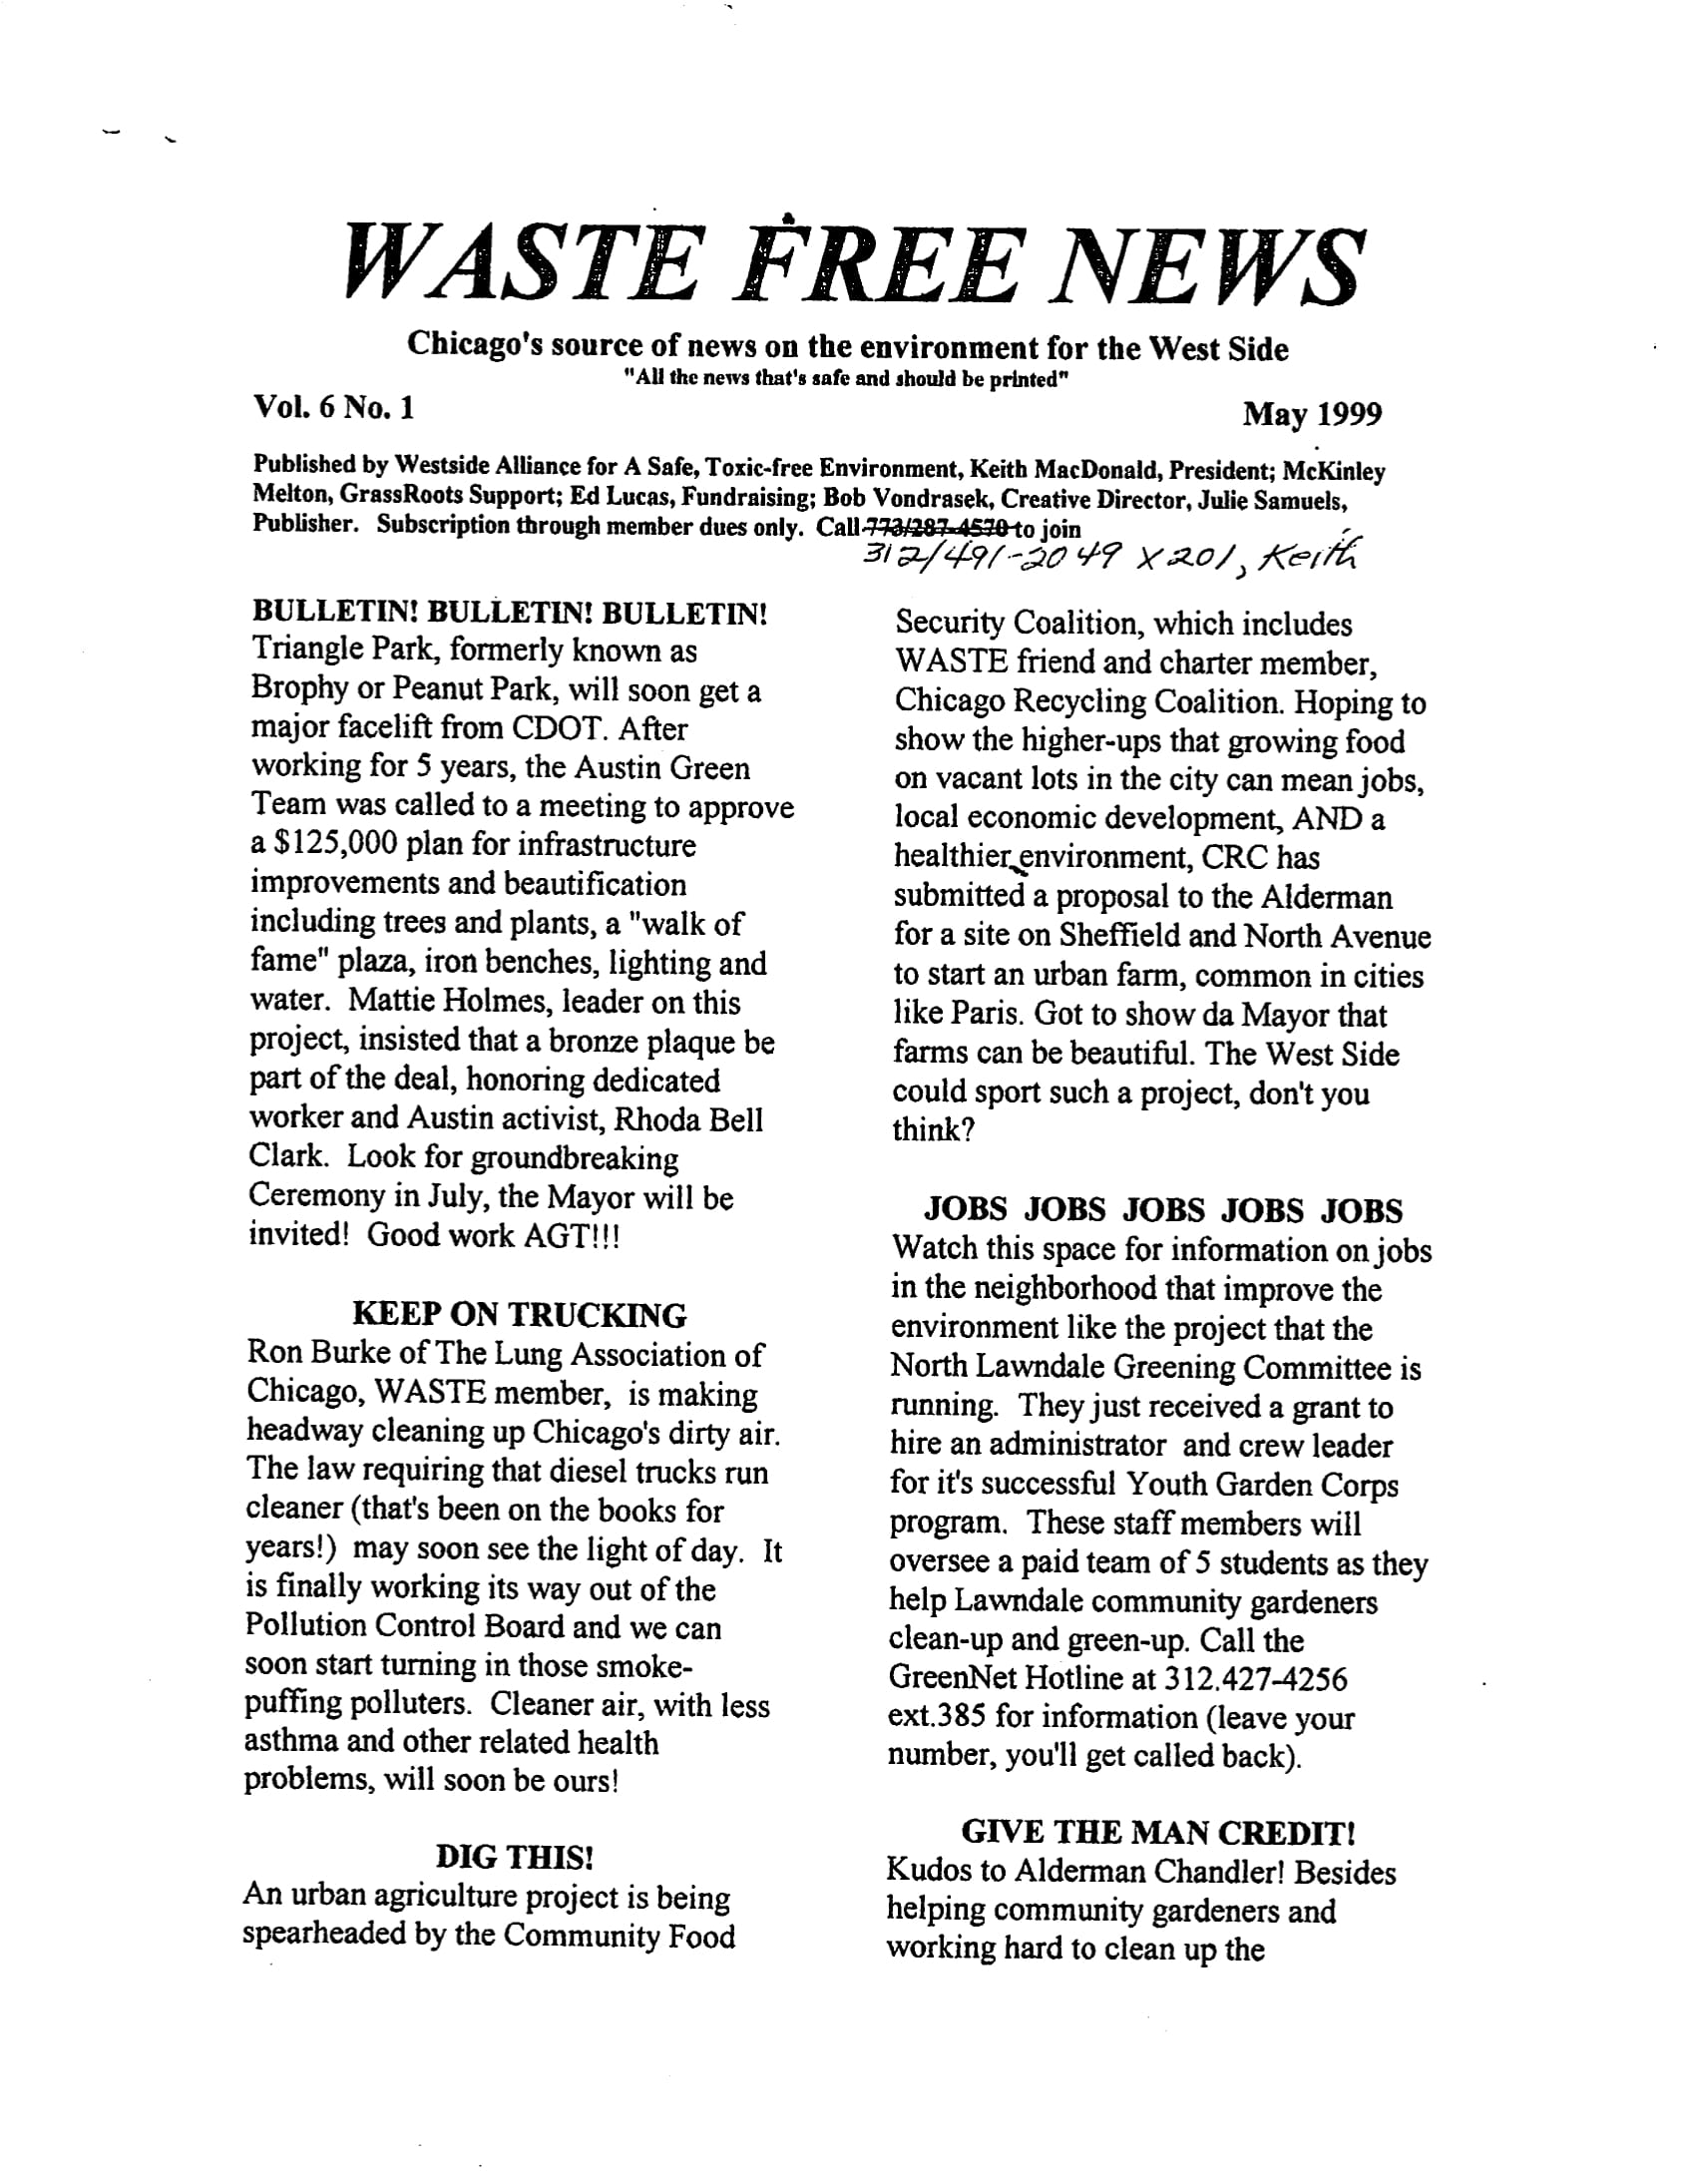 Waste Free News-1.jpg